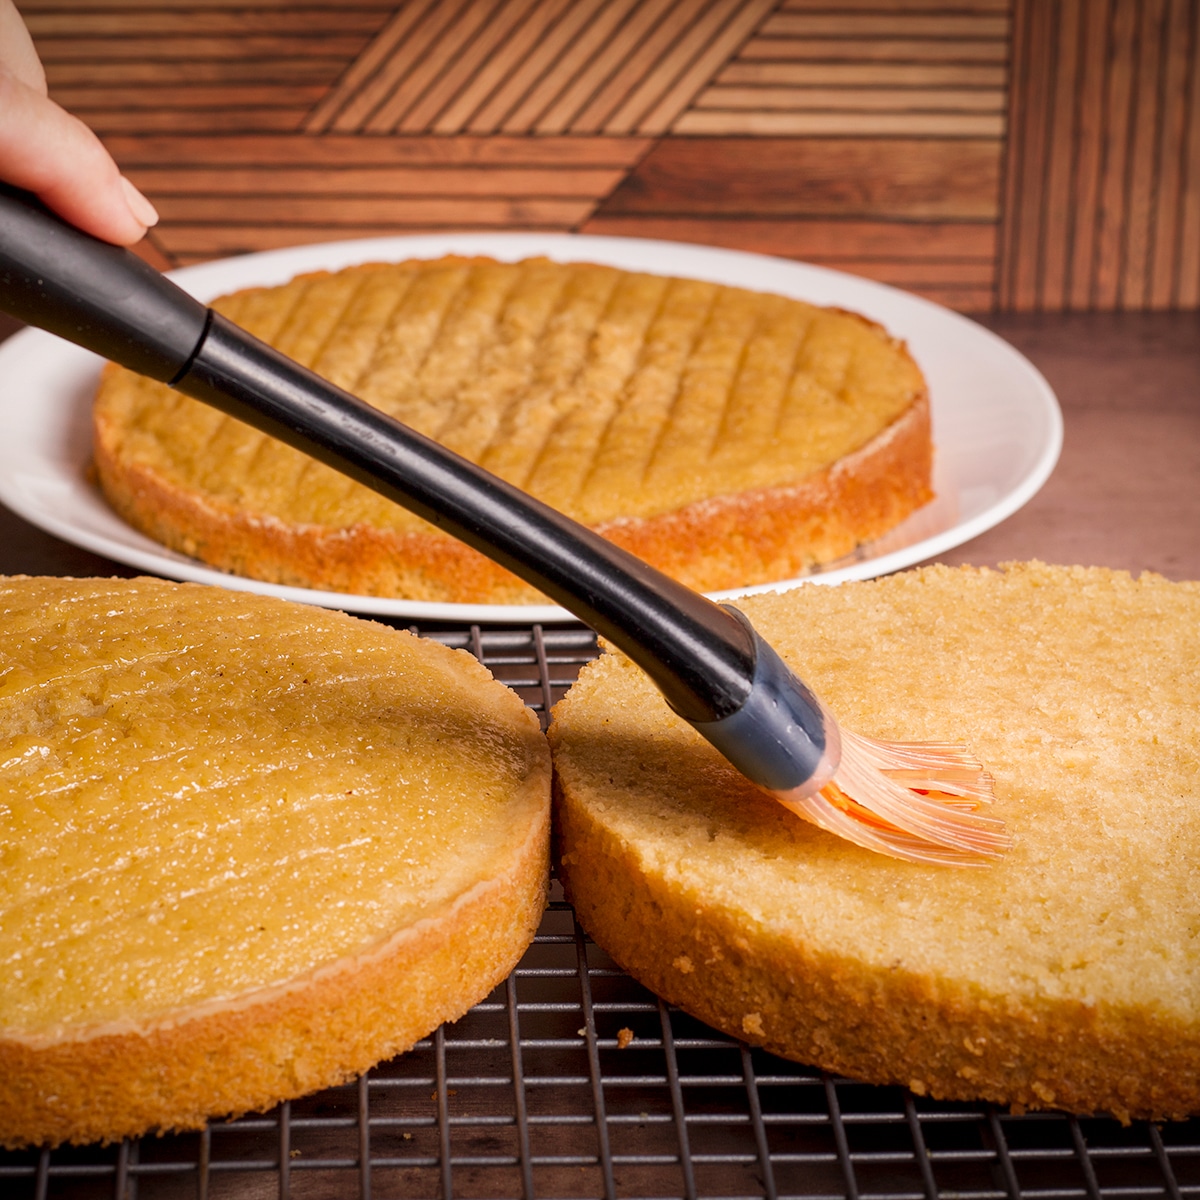 Using a pastry brush to coat orange olive oil cake layers with orange liquor.